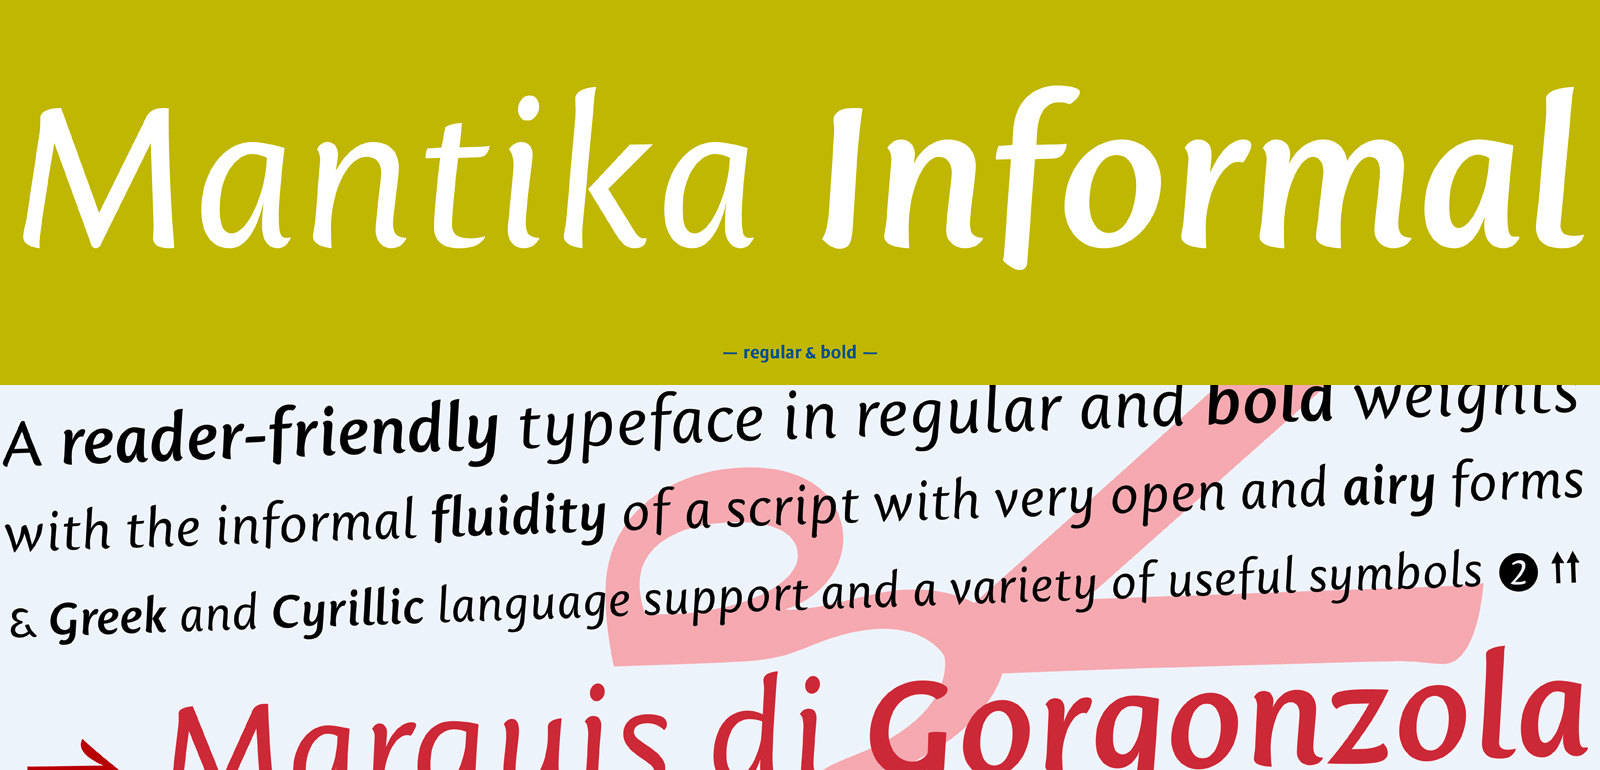 Mantika Informal typeface by Jürgen Weltin